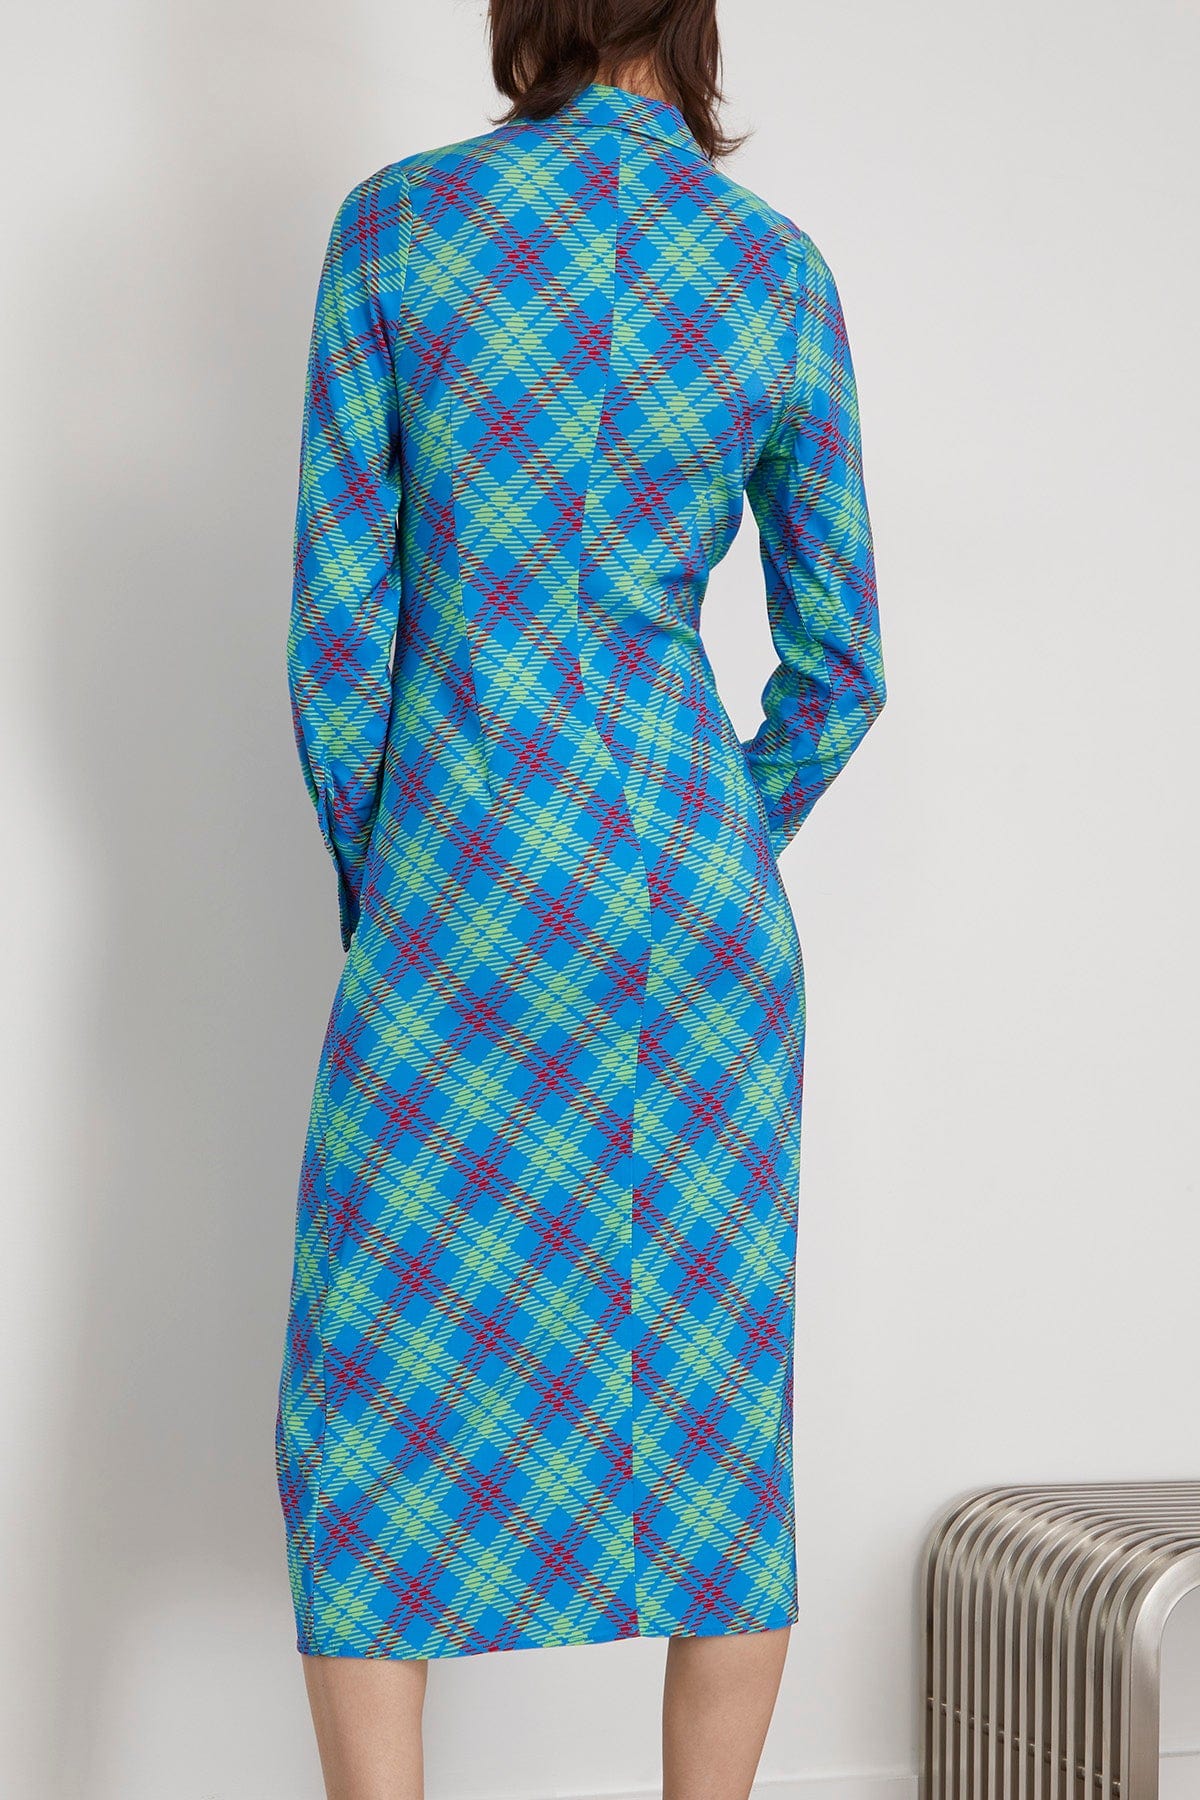 Kitri Casual Dresses Lennox Shirt Dress in Blue Check Kitri Lennox Shirt Dress in Blue Check